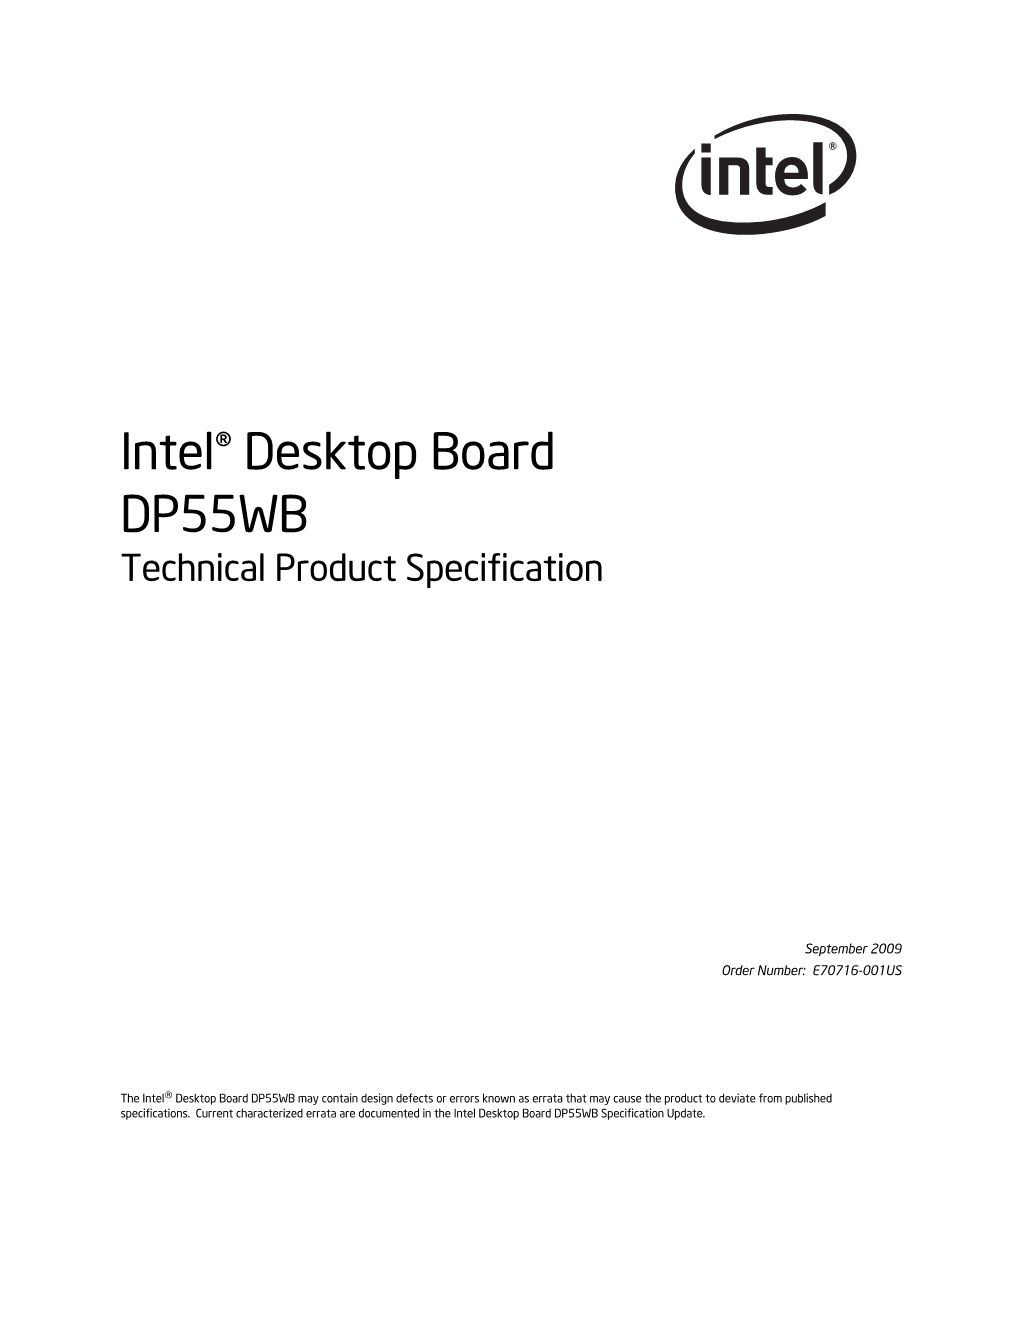 Intel® Desktop Board DP55WB Technical Product Specification